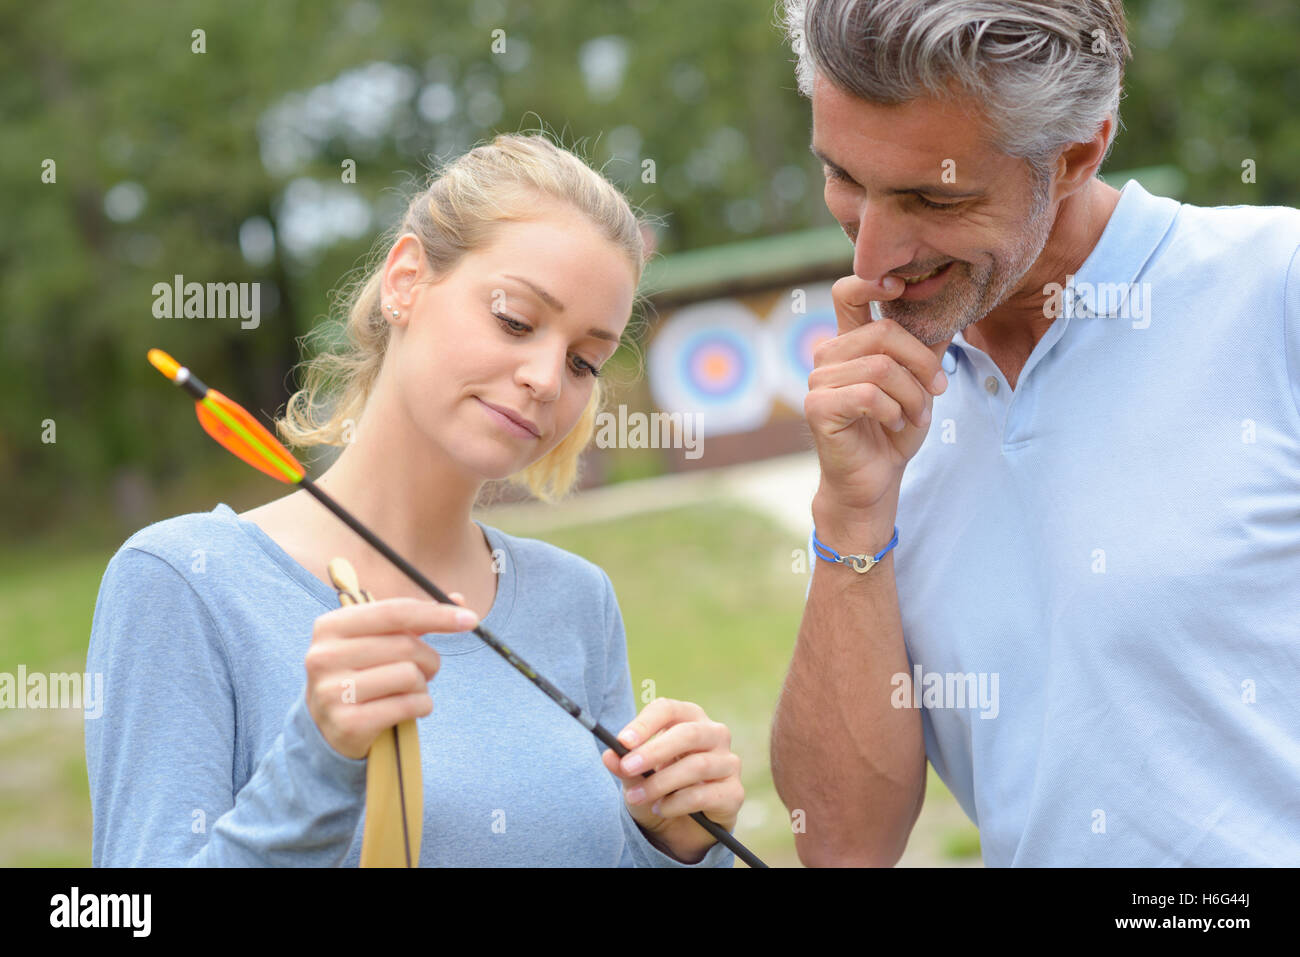 archers inspecting arrows Stock Photo